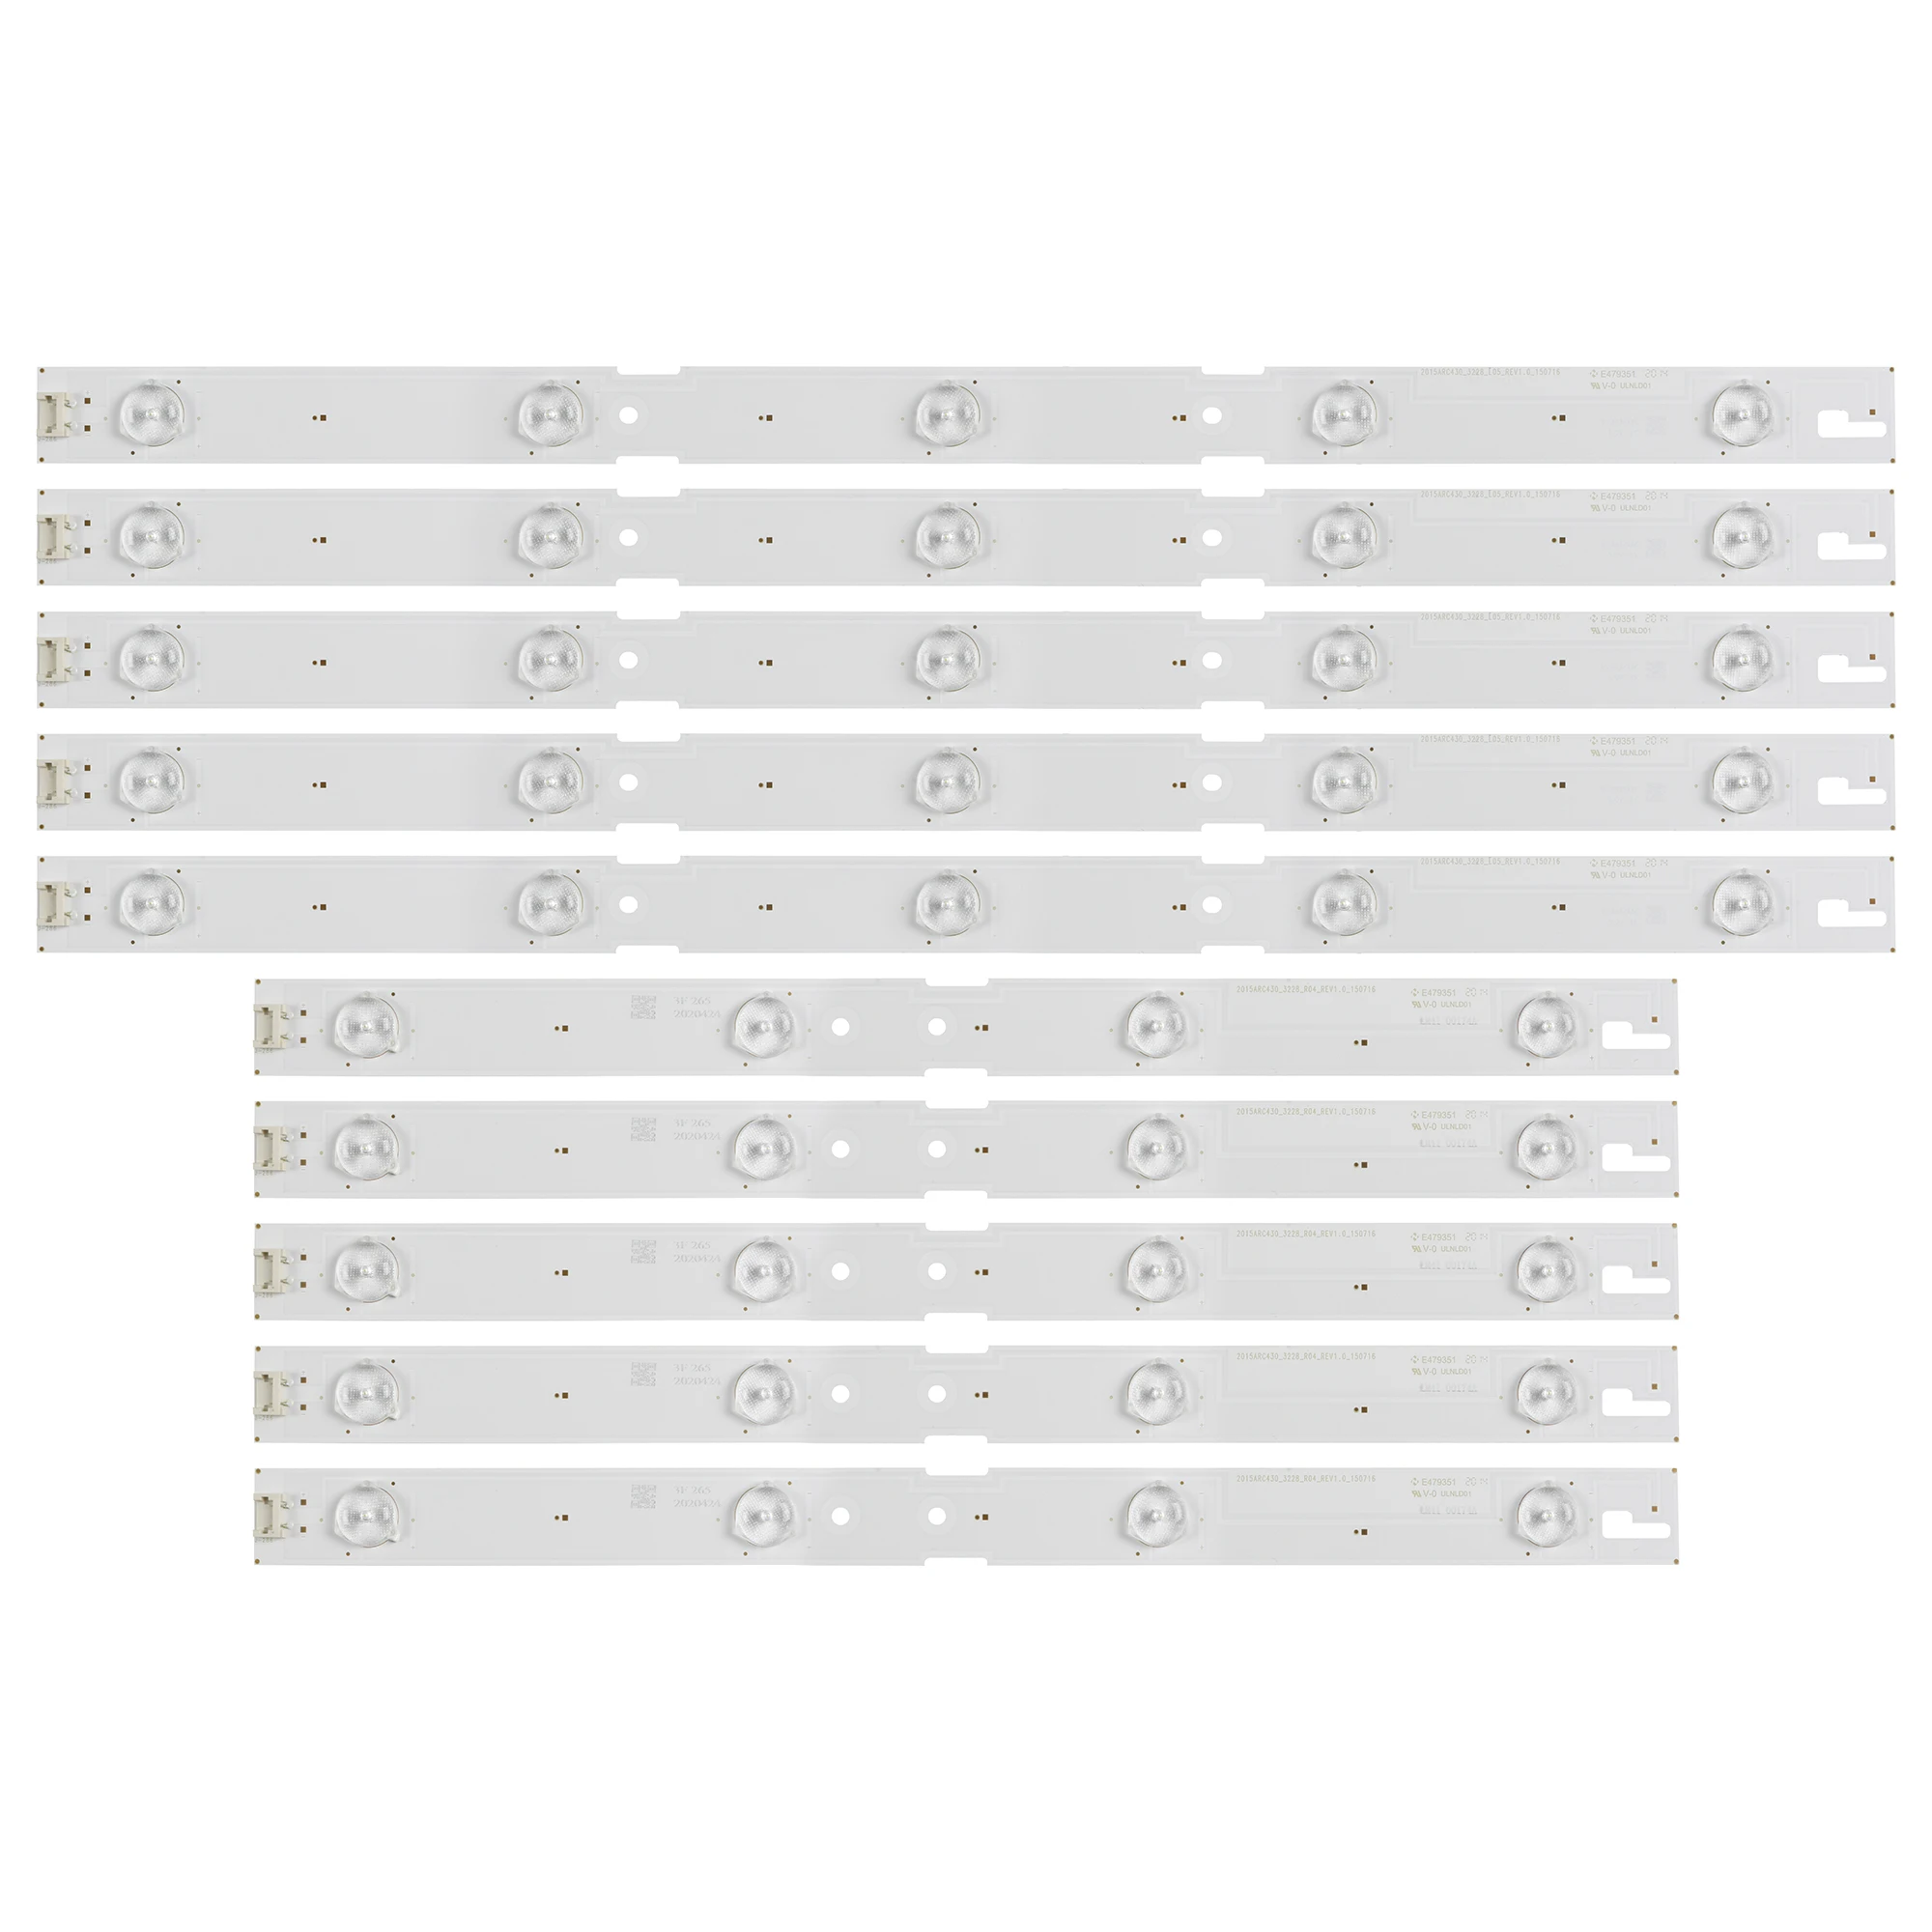 

New 10PCS LED Backlight Strip For SAMSUNG ZLE60600-AB 43GFB6627 2015ARC430_3228_R04 L05_REV1.0_150716 LM41-00174A LM41-00173A